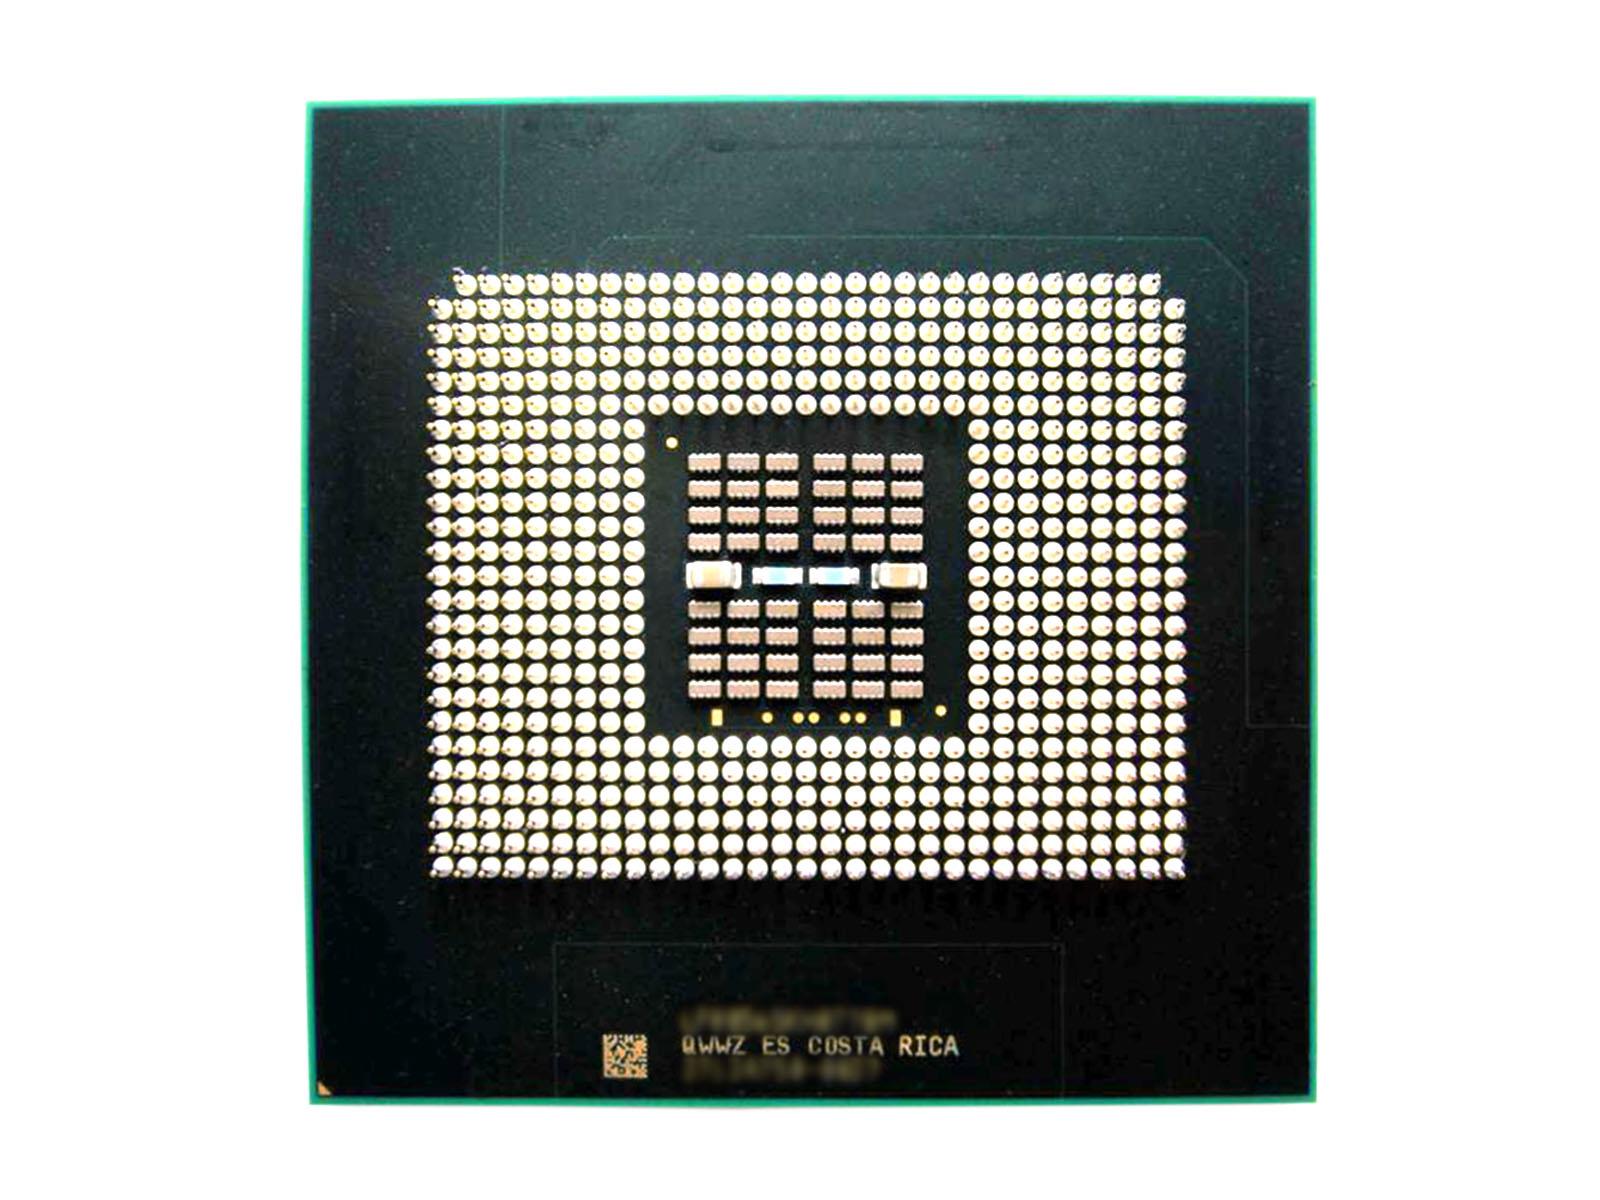 Intel Xeon 604 3.2GHz CPU